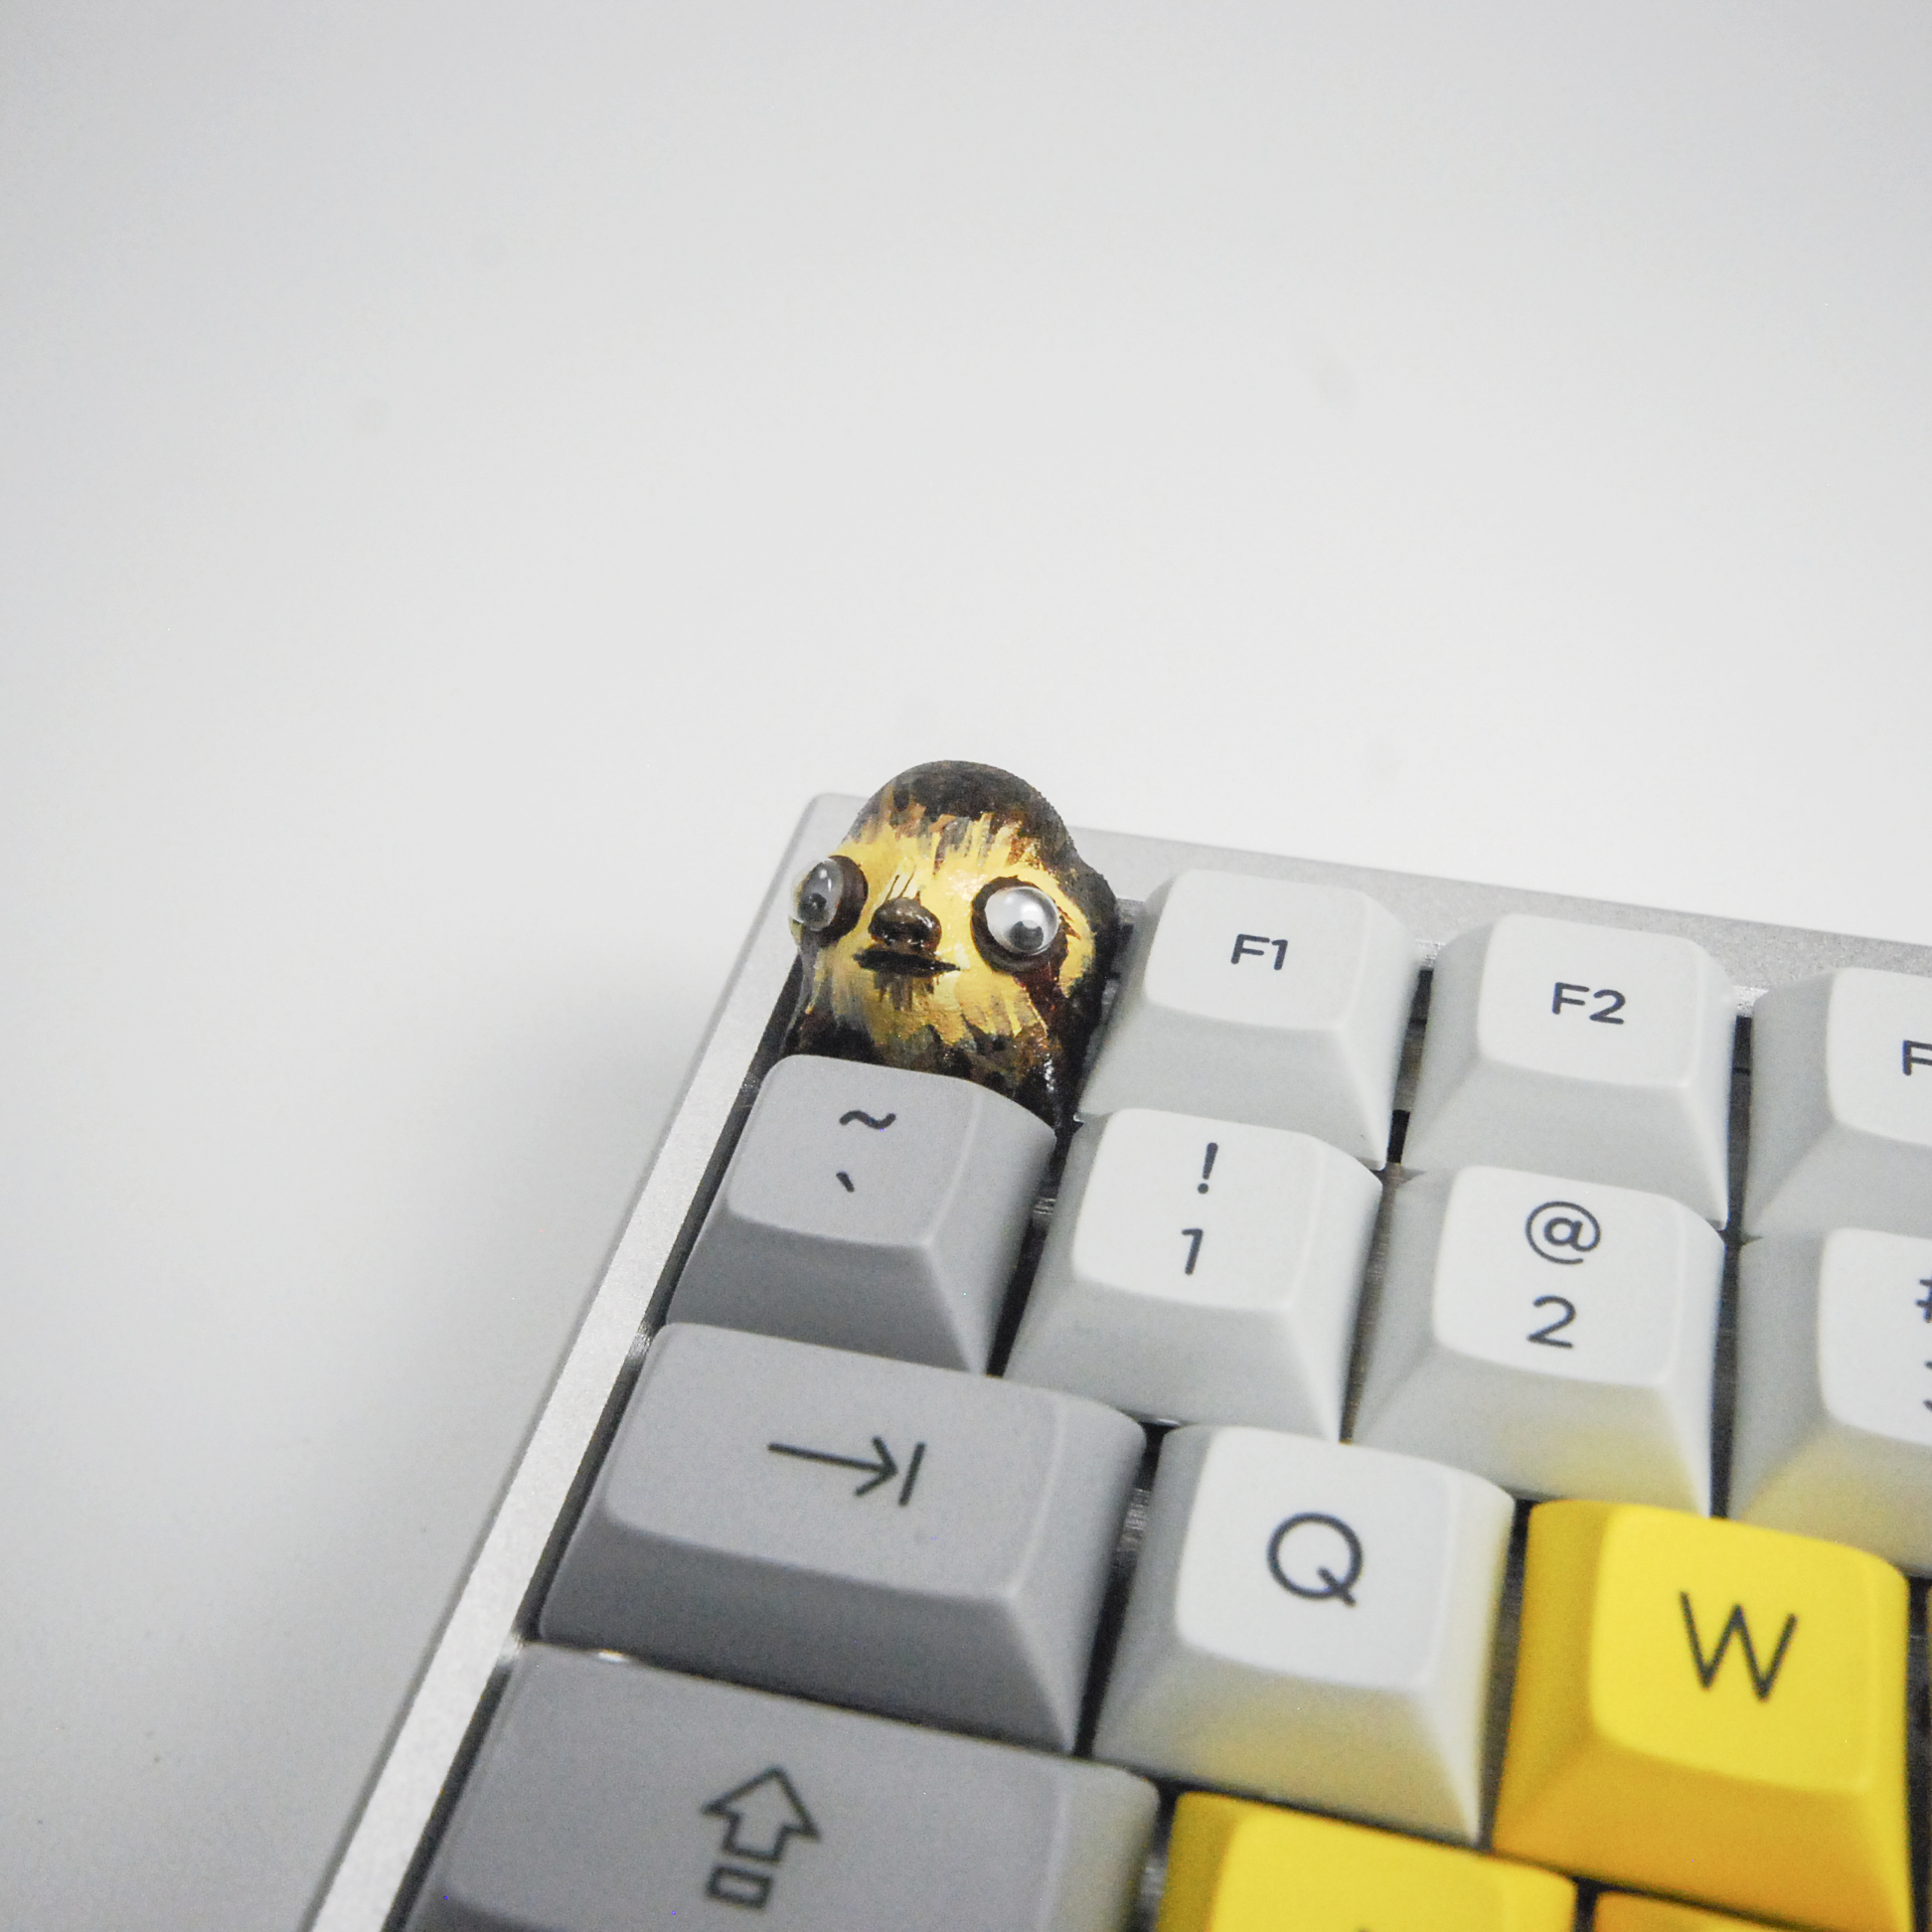 Sloth cap on keyboard